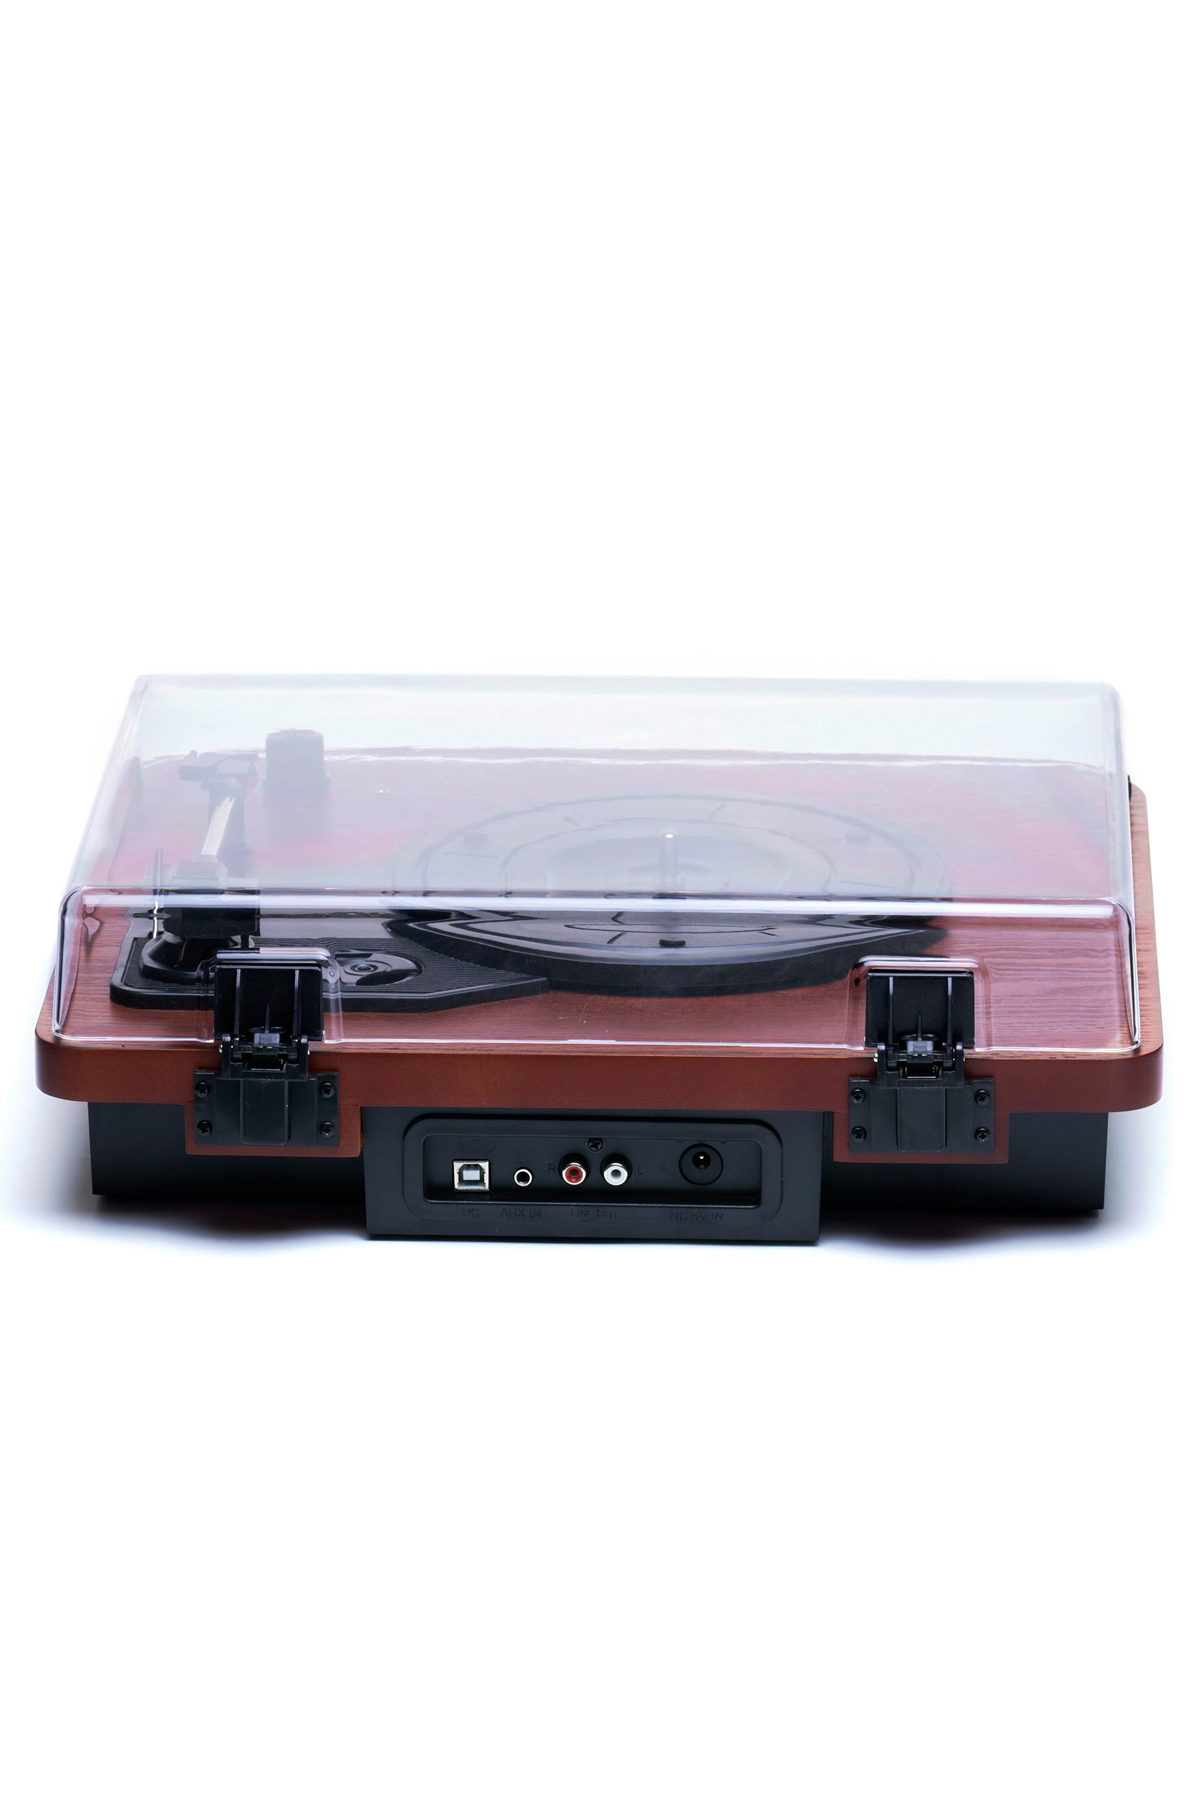 GDL Retro T202 Nostaljik Pikap CHERRY (Bluetooth - Mp3 Pc Kayıt)